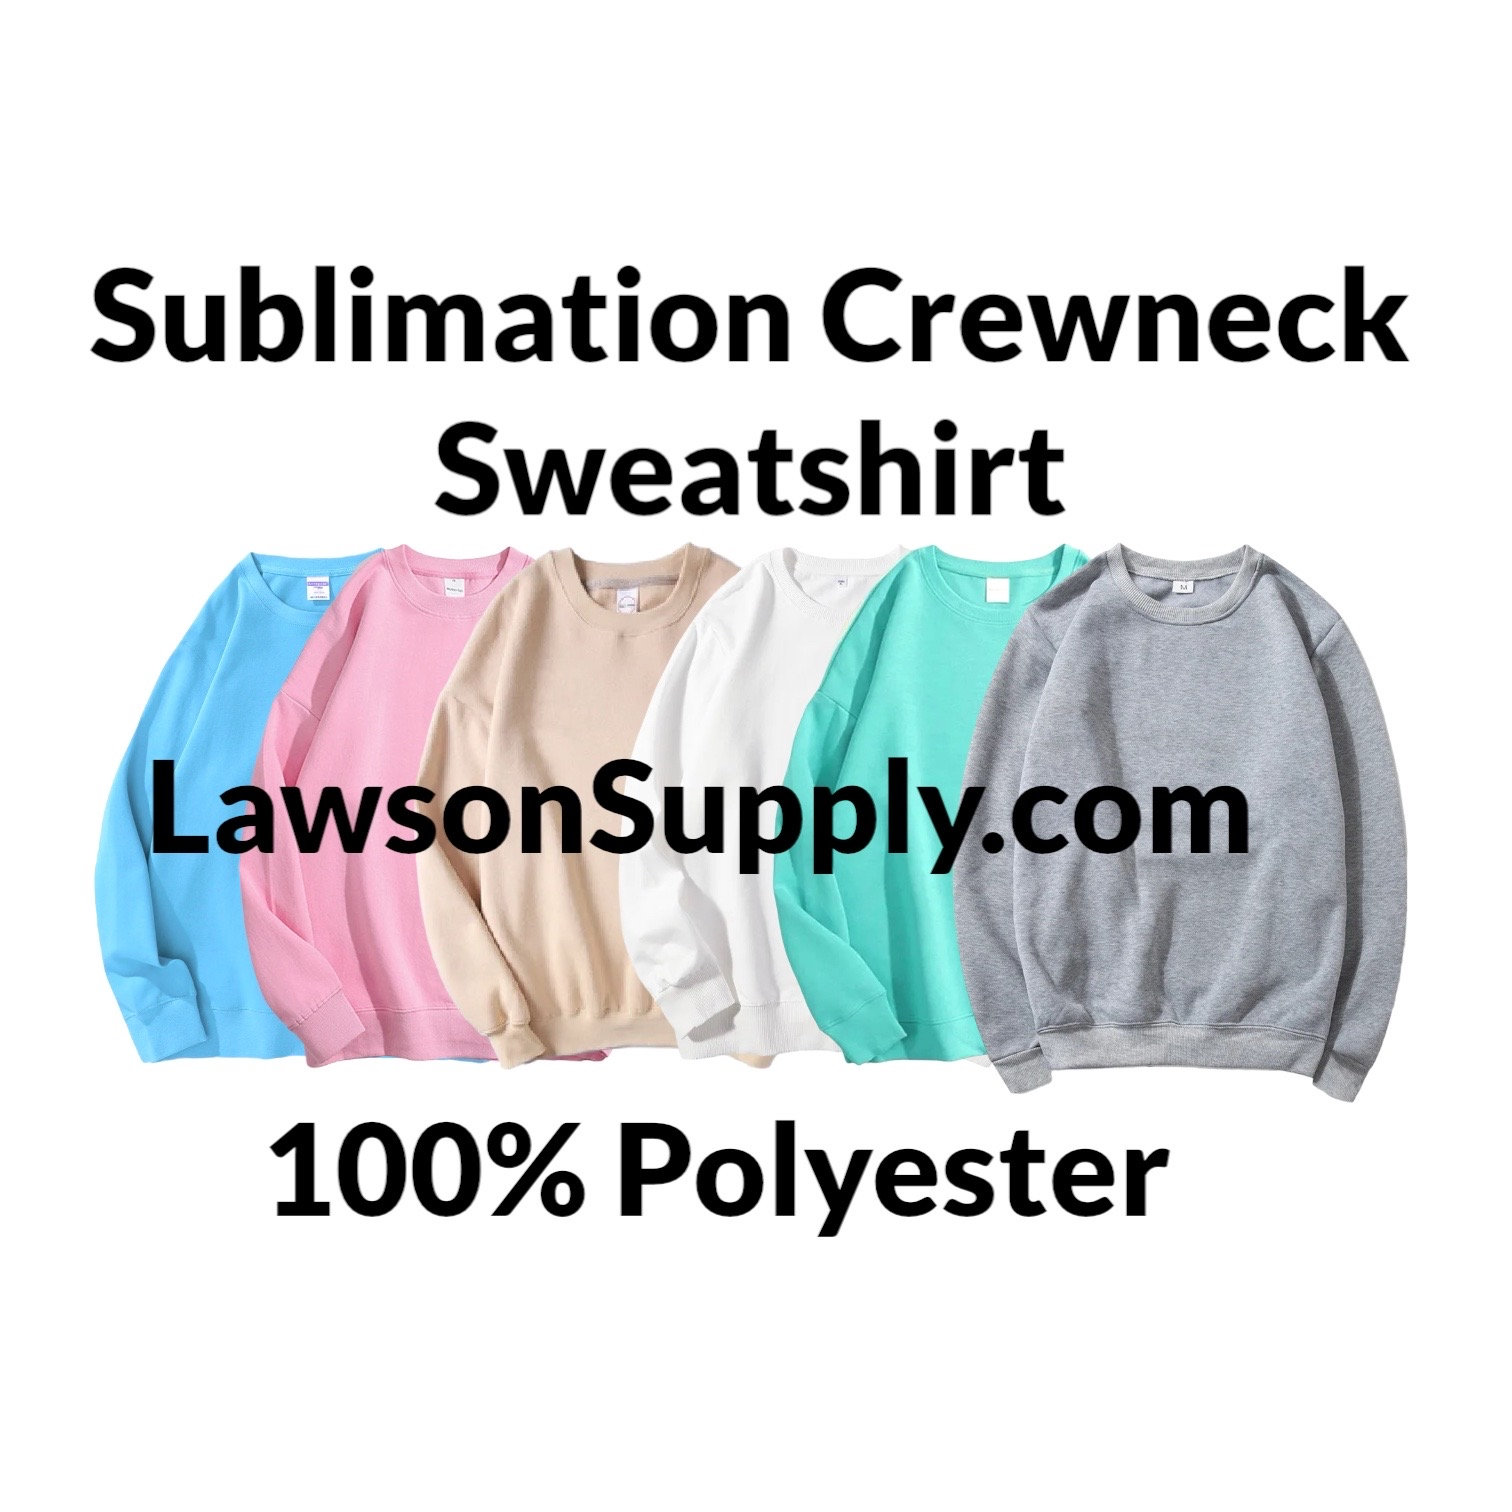 100% Polyester Sublimation Crewneck